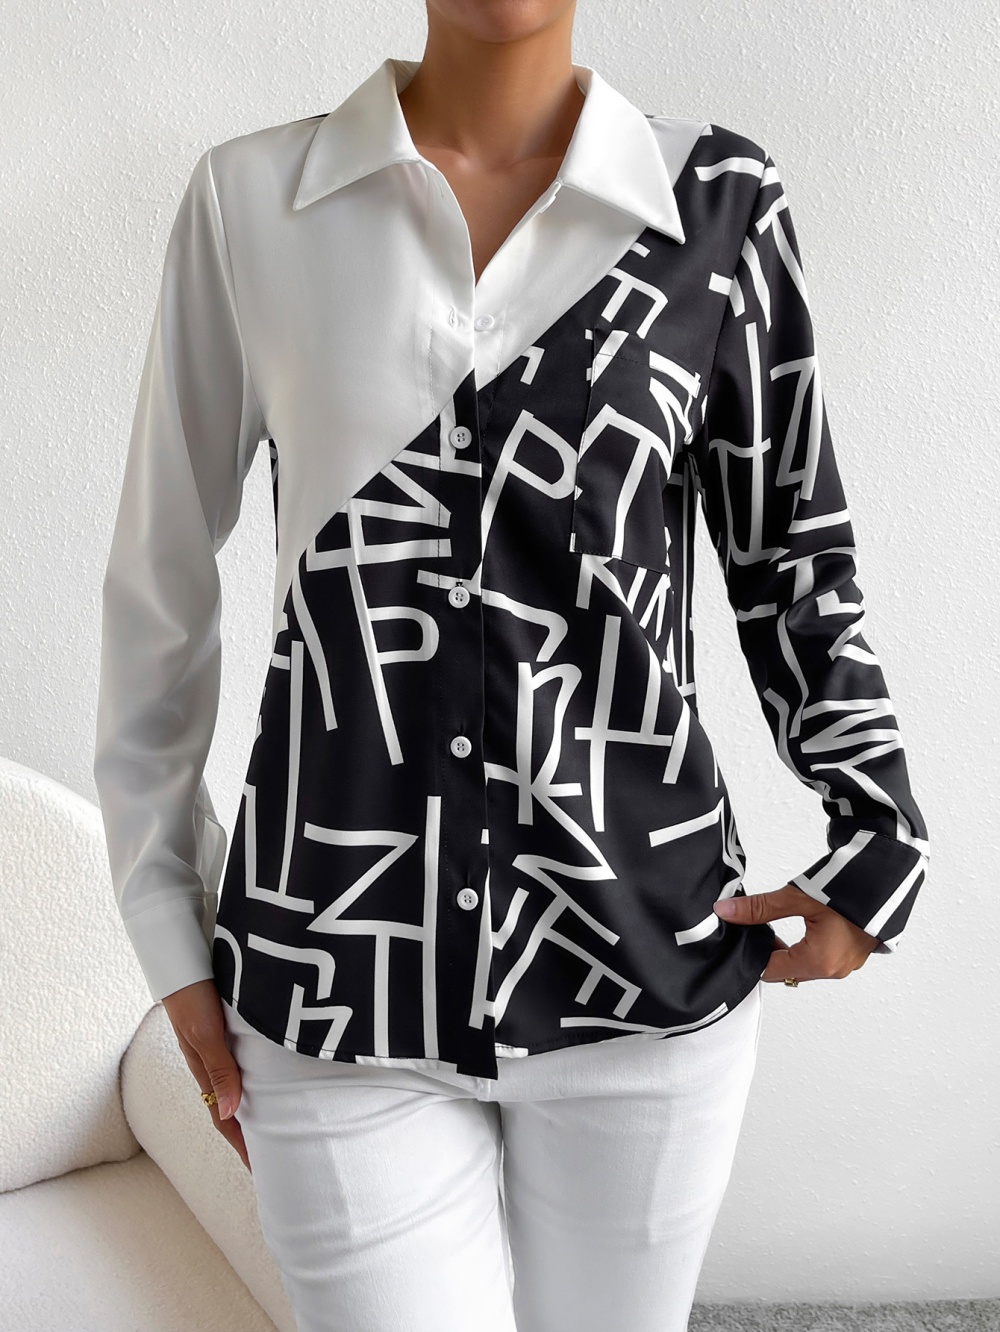 Commuting business suit fashion shirt for women